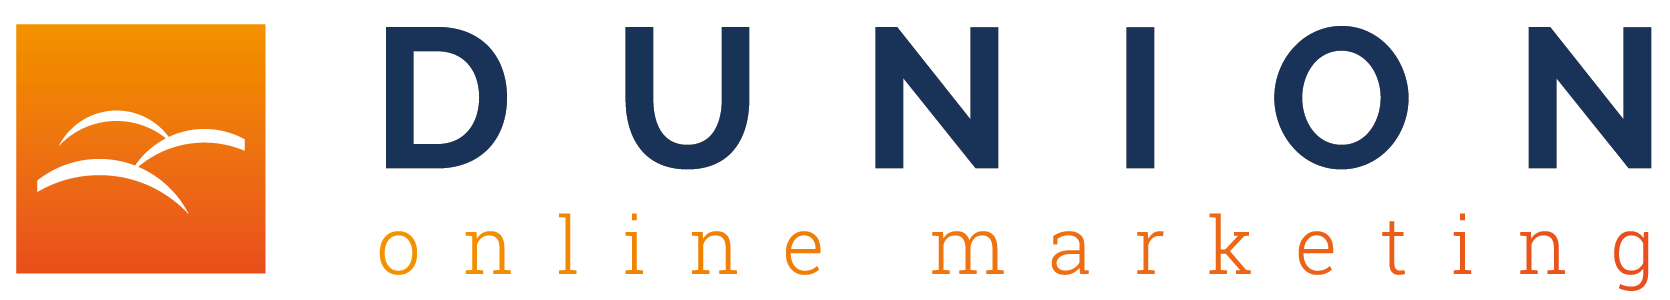 Dunion Online Marketing Footer Logo